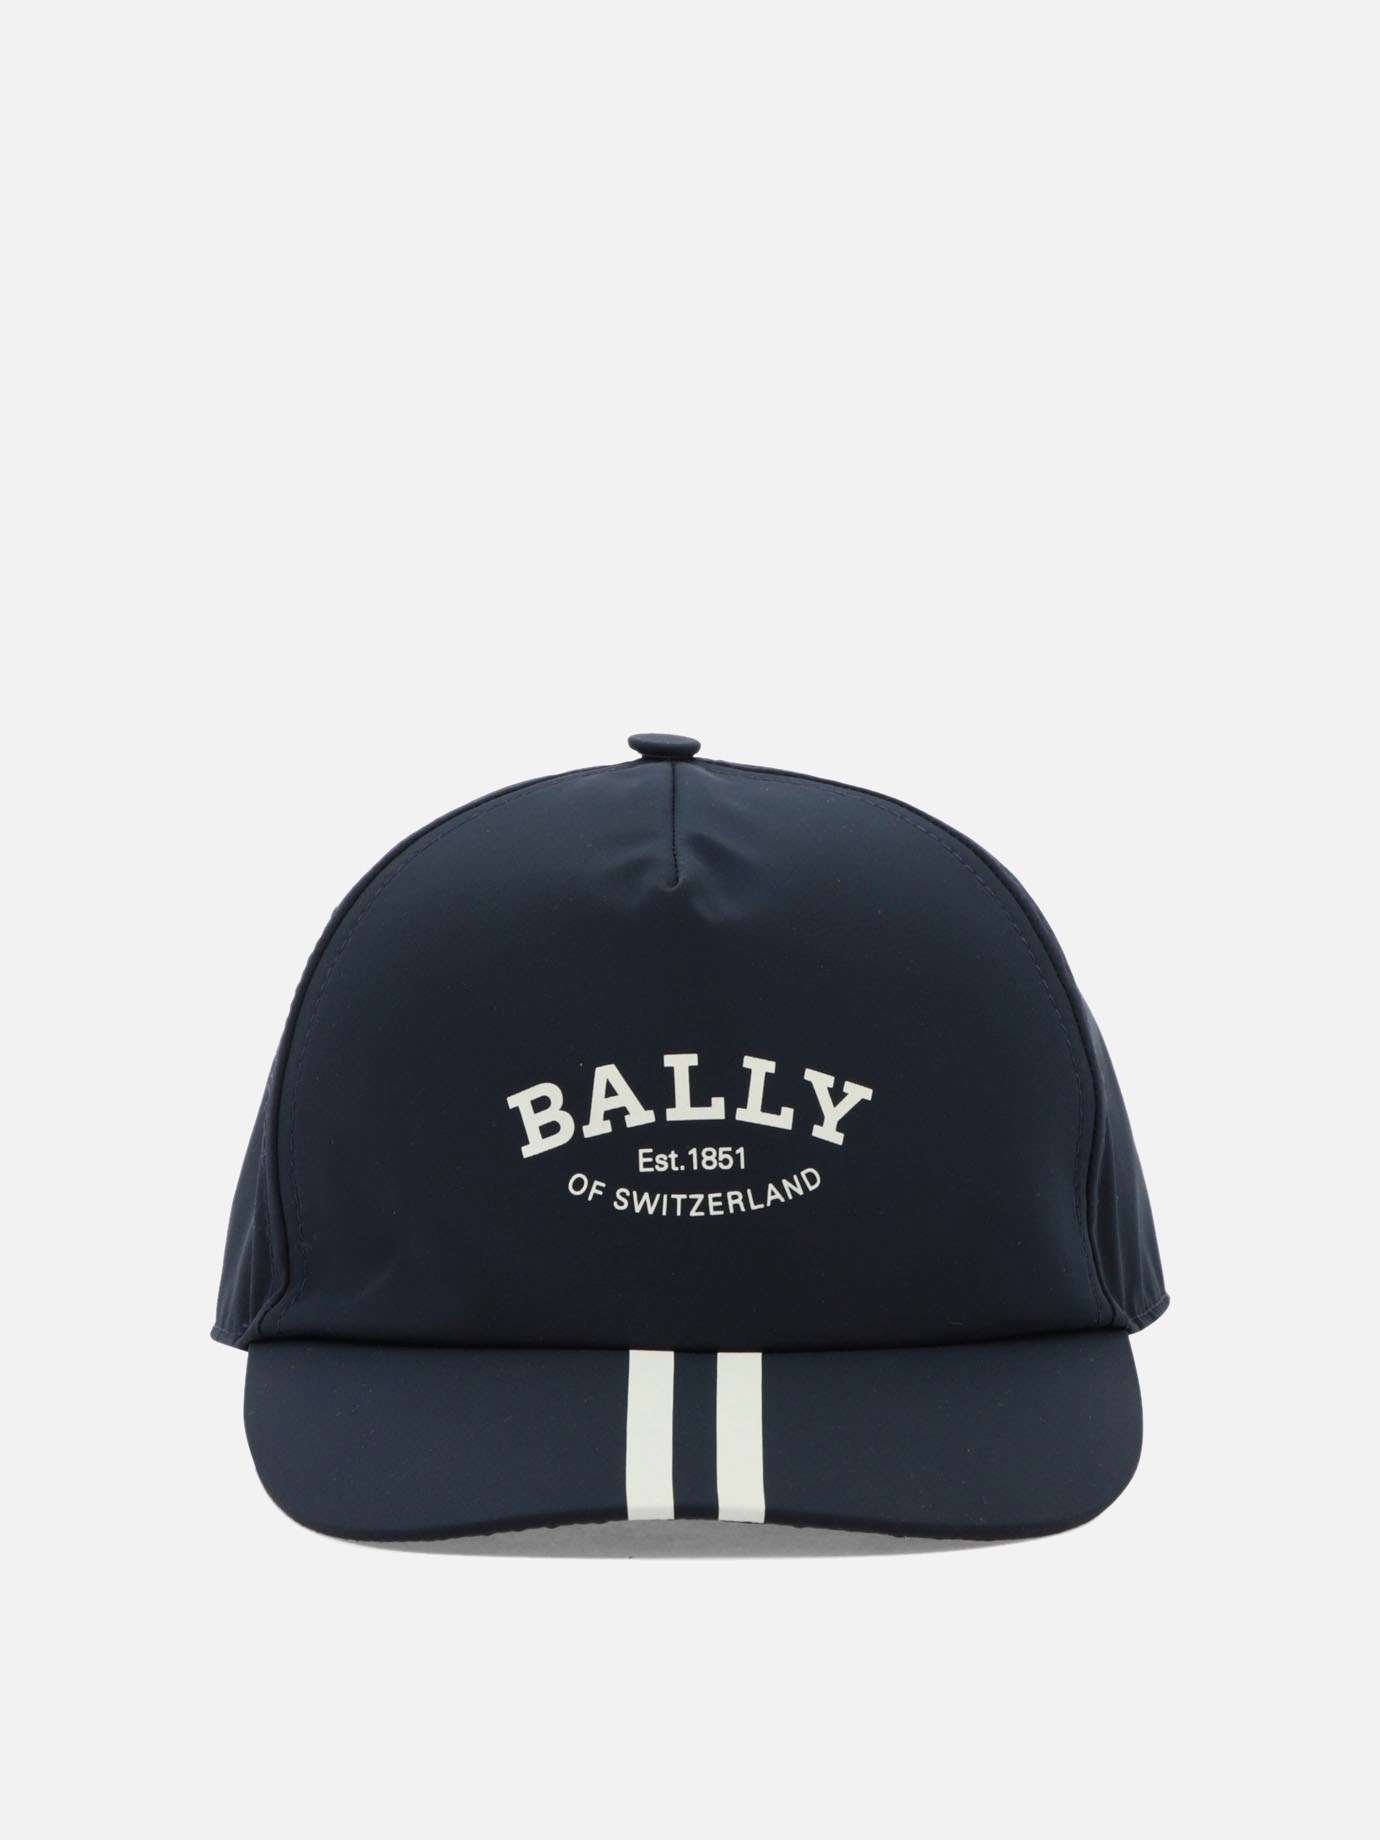  Est. 1851  baseball capby Bally - 1